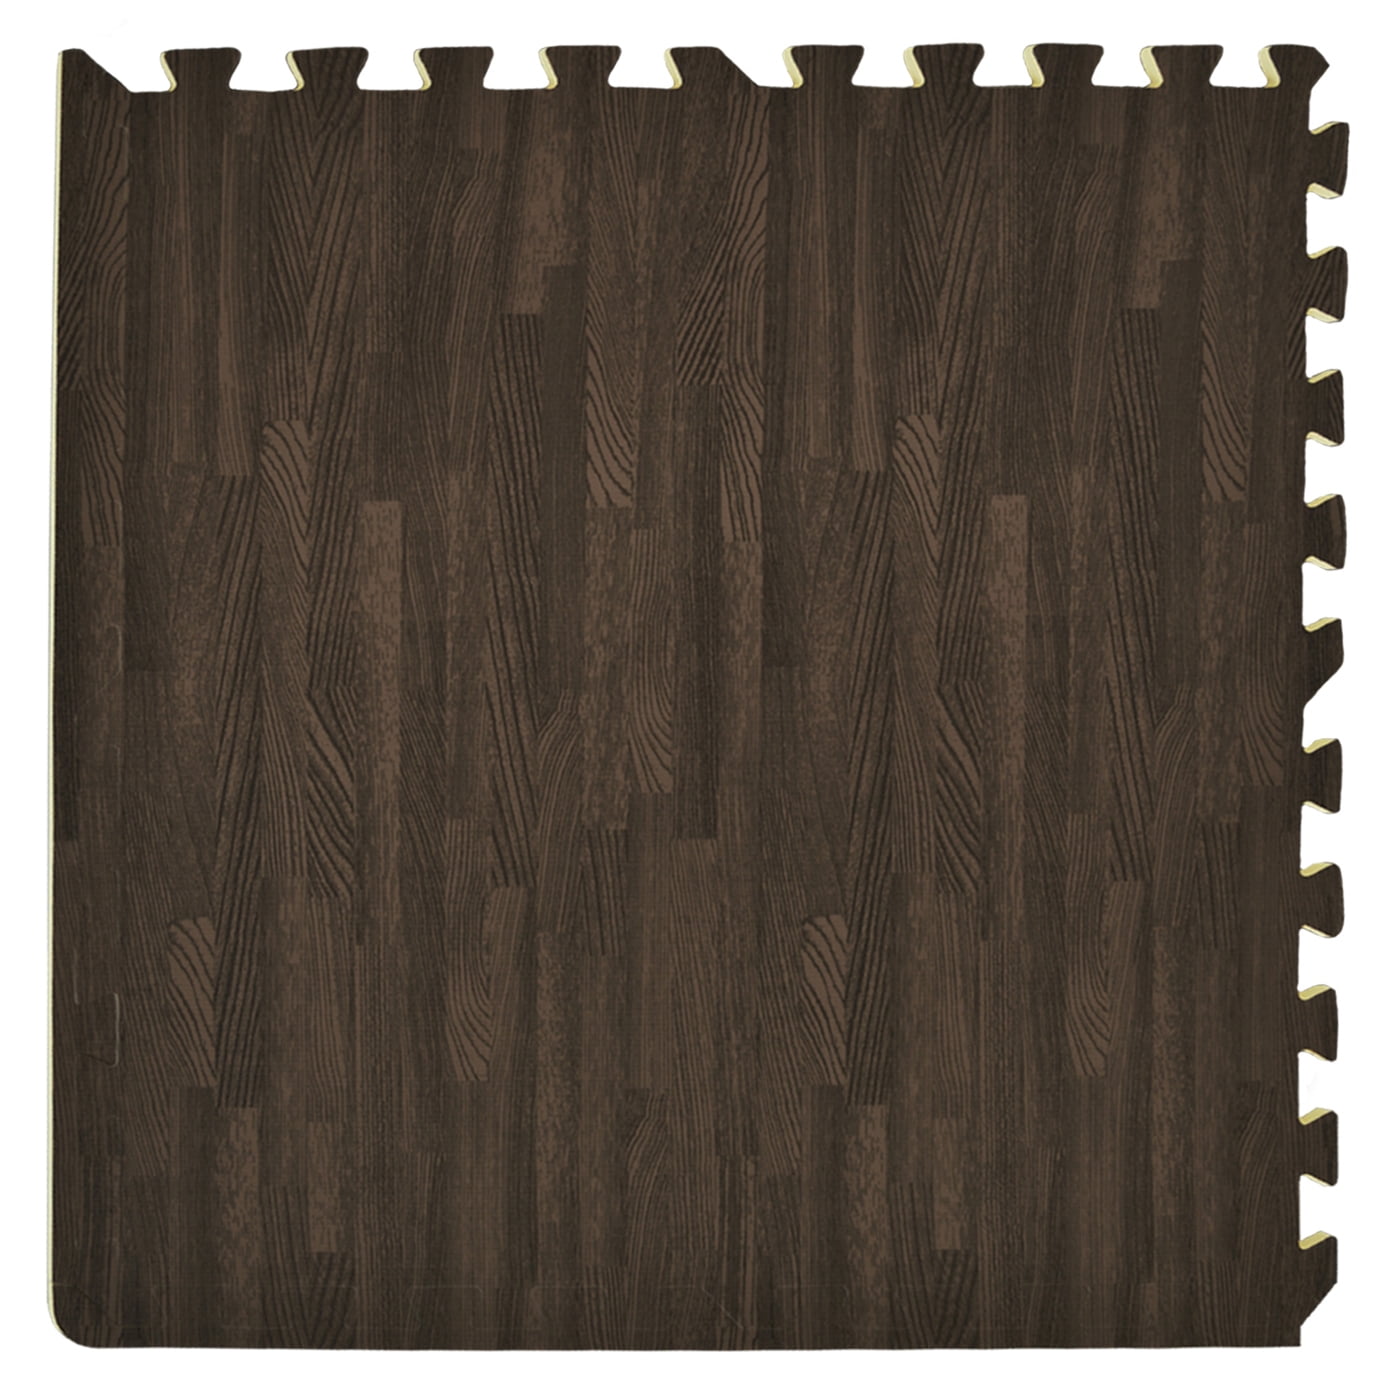 GLOGLOW Printed Wood Grain Interlocking Foam Anti Fatigue Floor Puzzle Mats Cork Grain and Bamboo Grain Flooring 9Pcs 30x30cm 